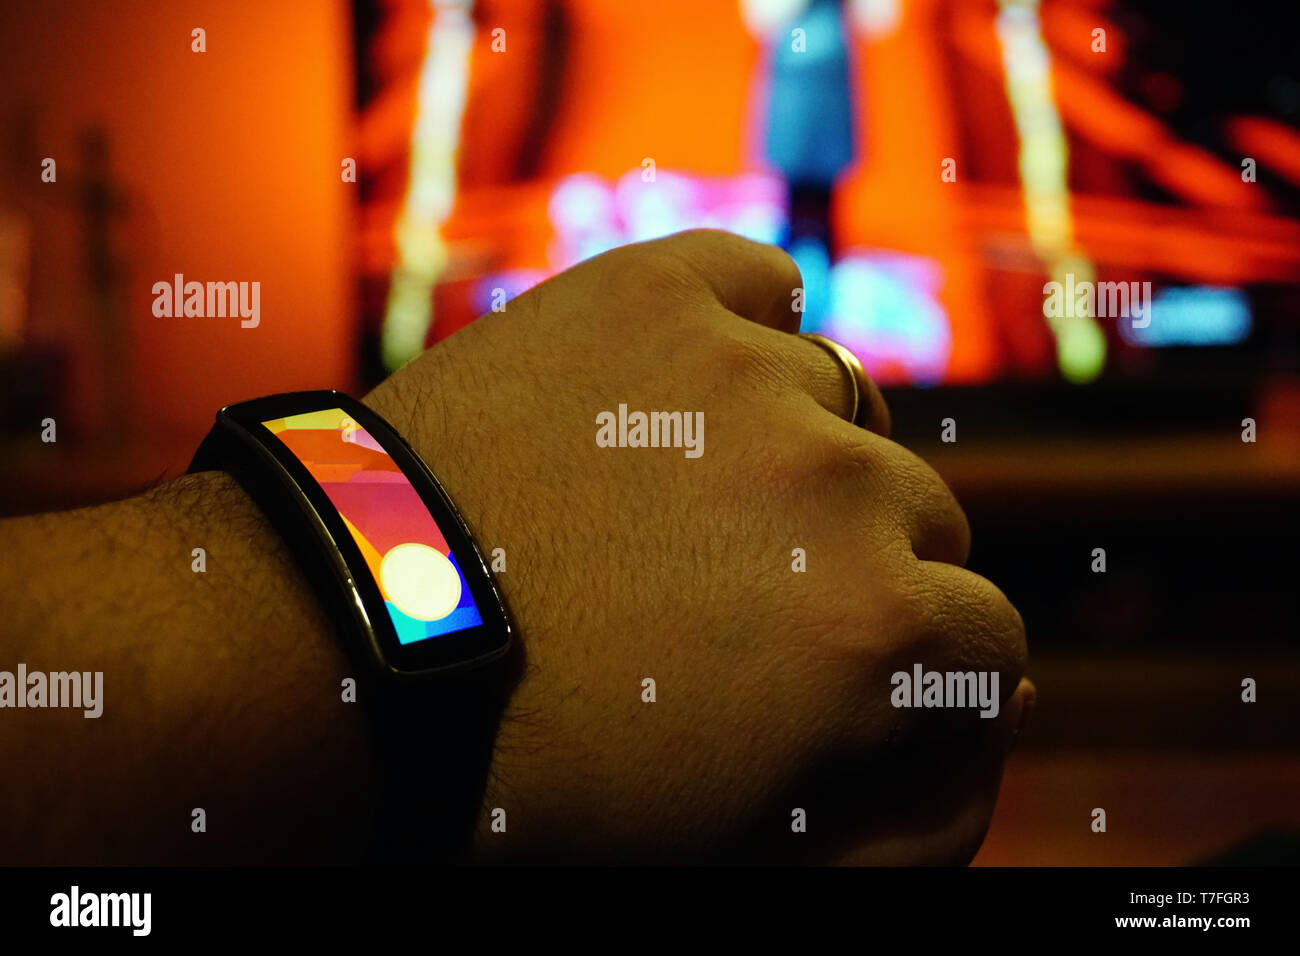 Smartwatch wearable technology on the wrist vivid image Stock Photo